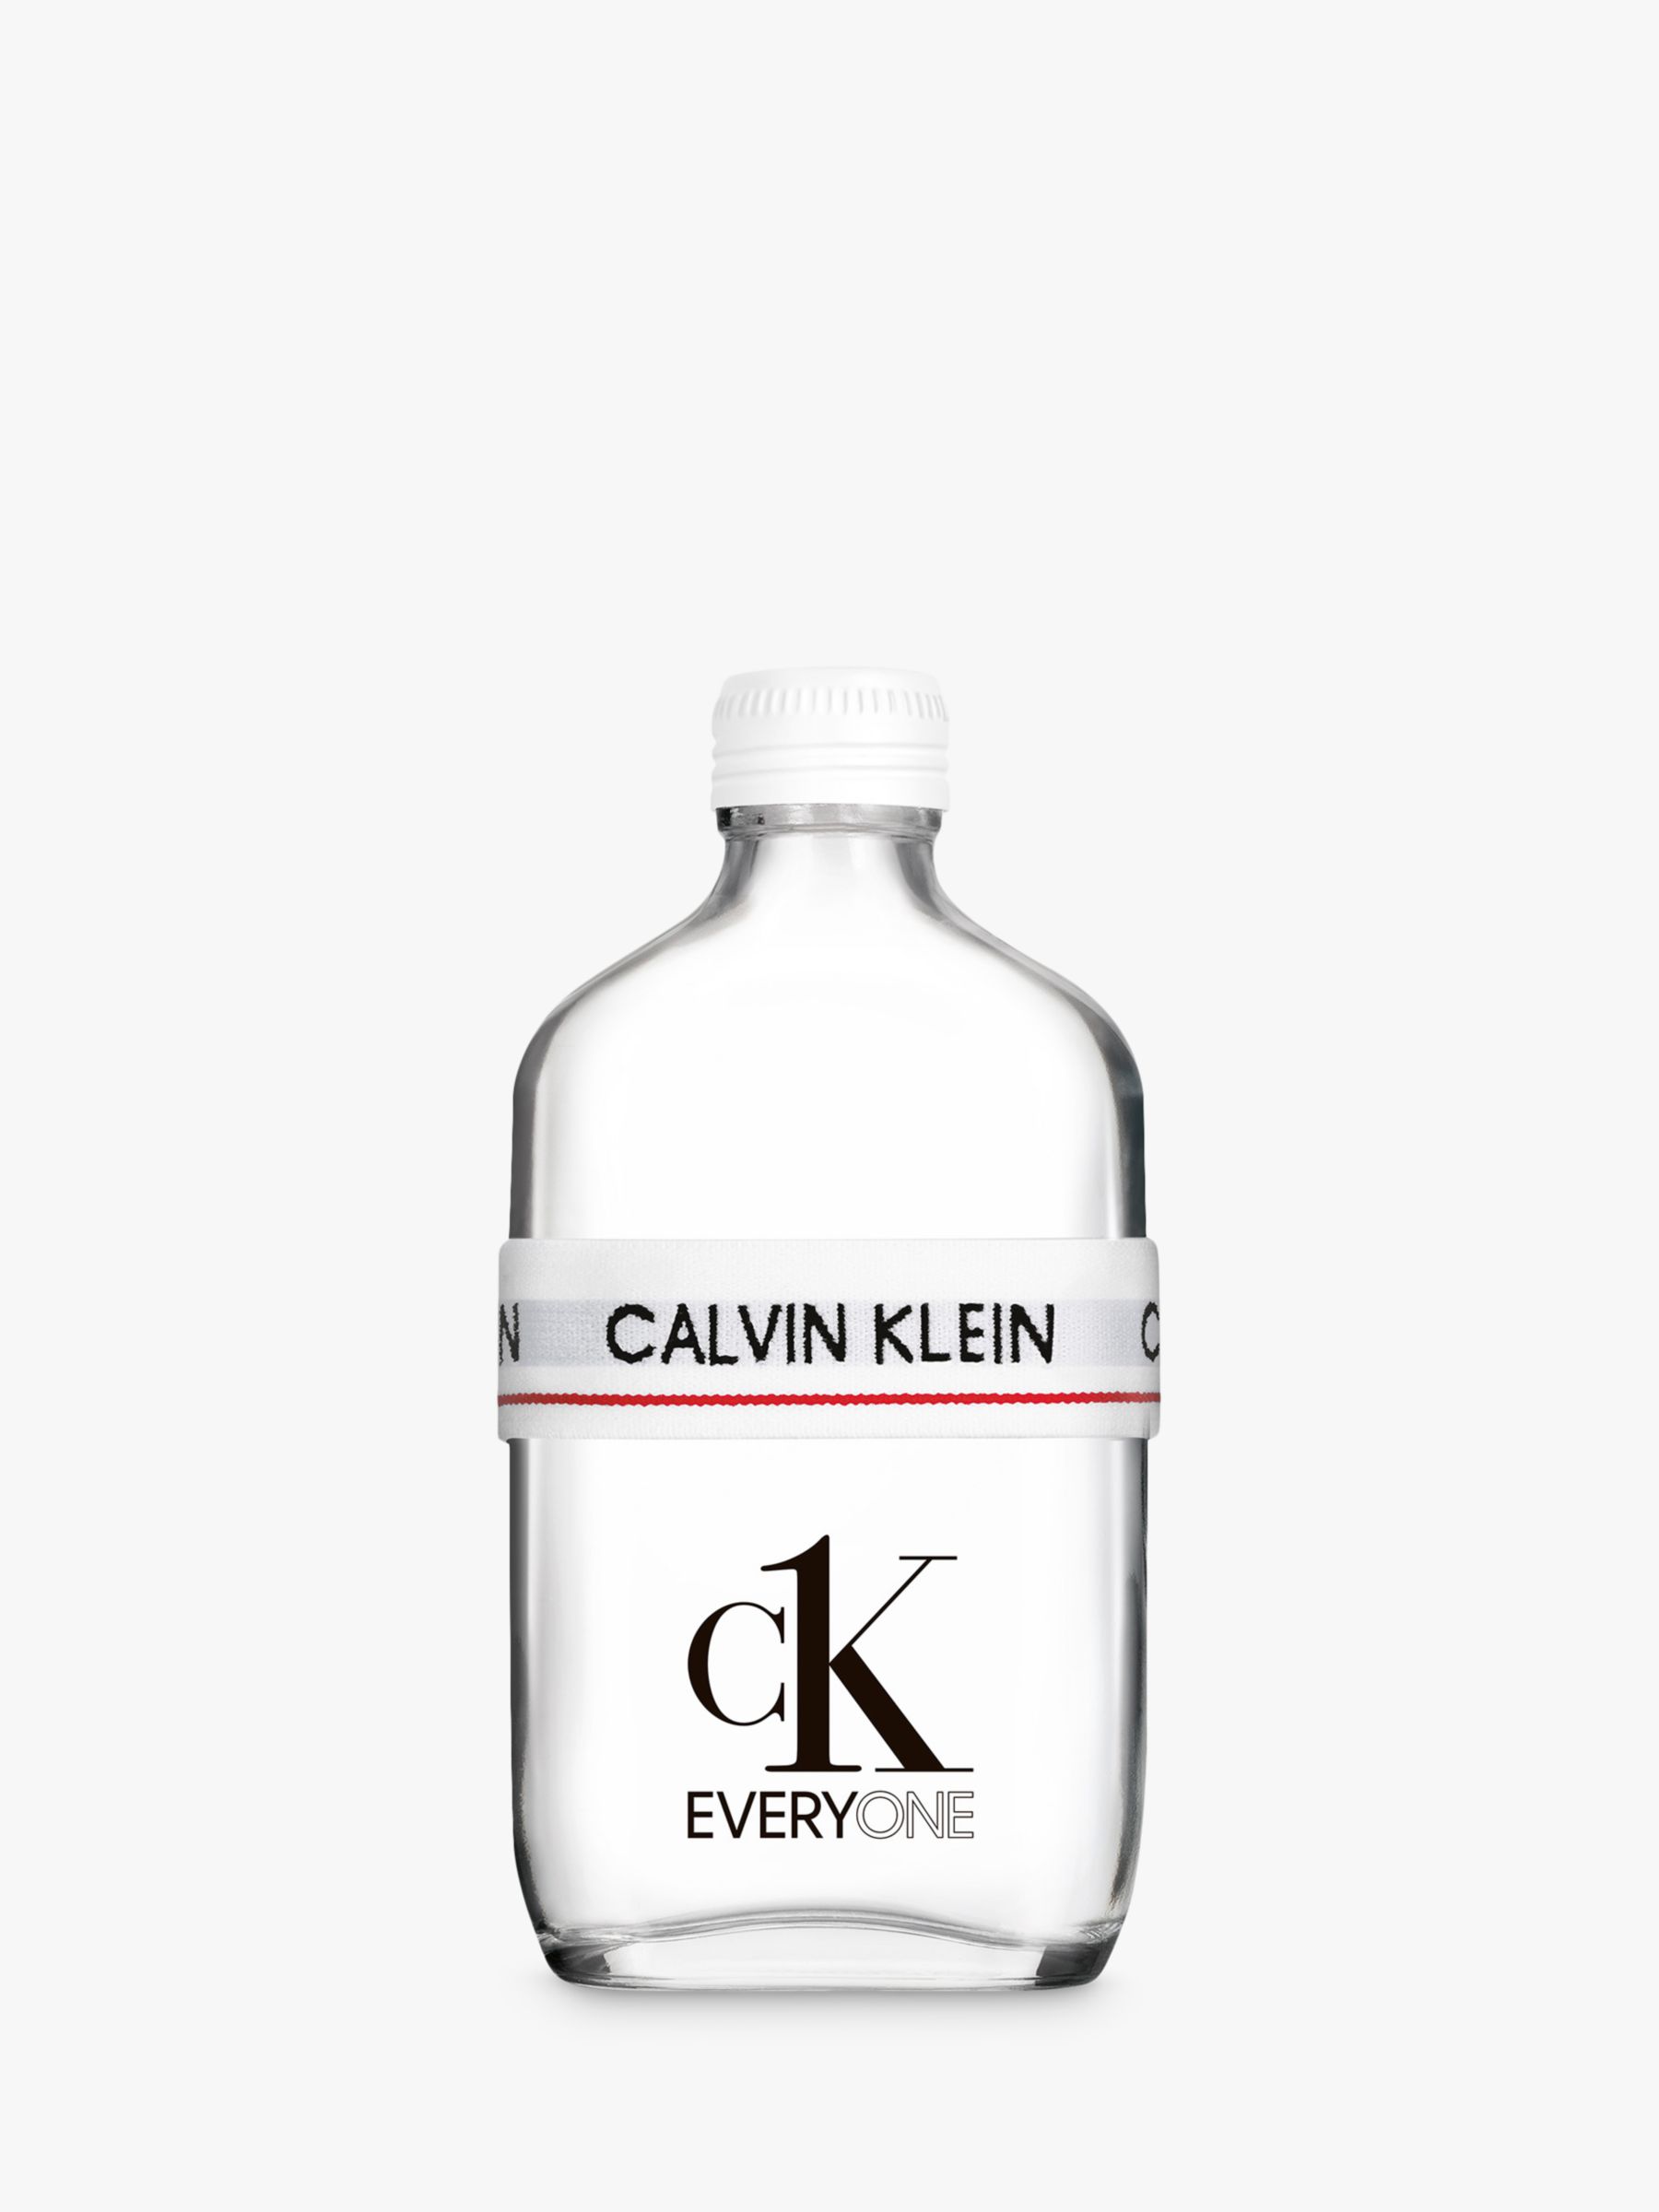 Calvin Klein CK EVERYONE Eau de Toilette, 100ml